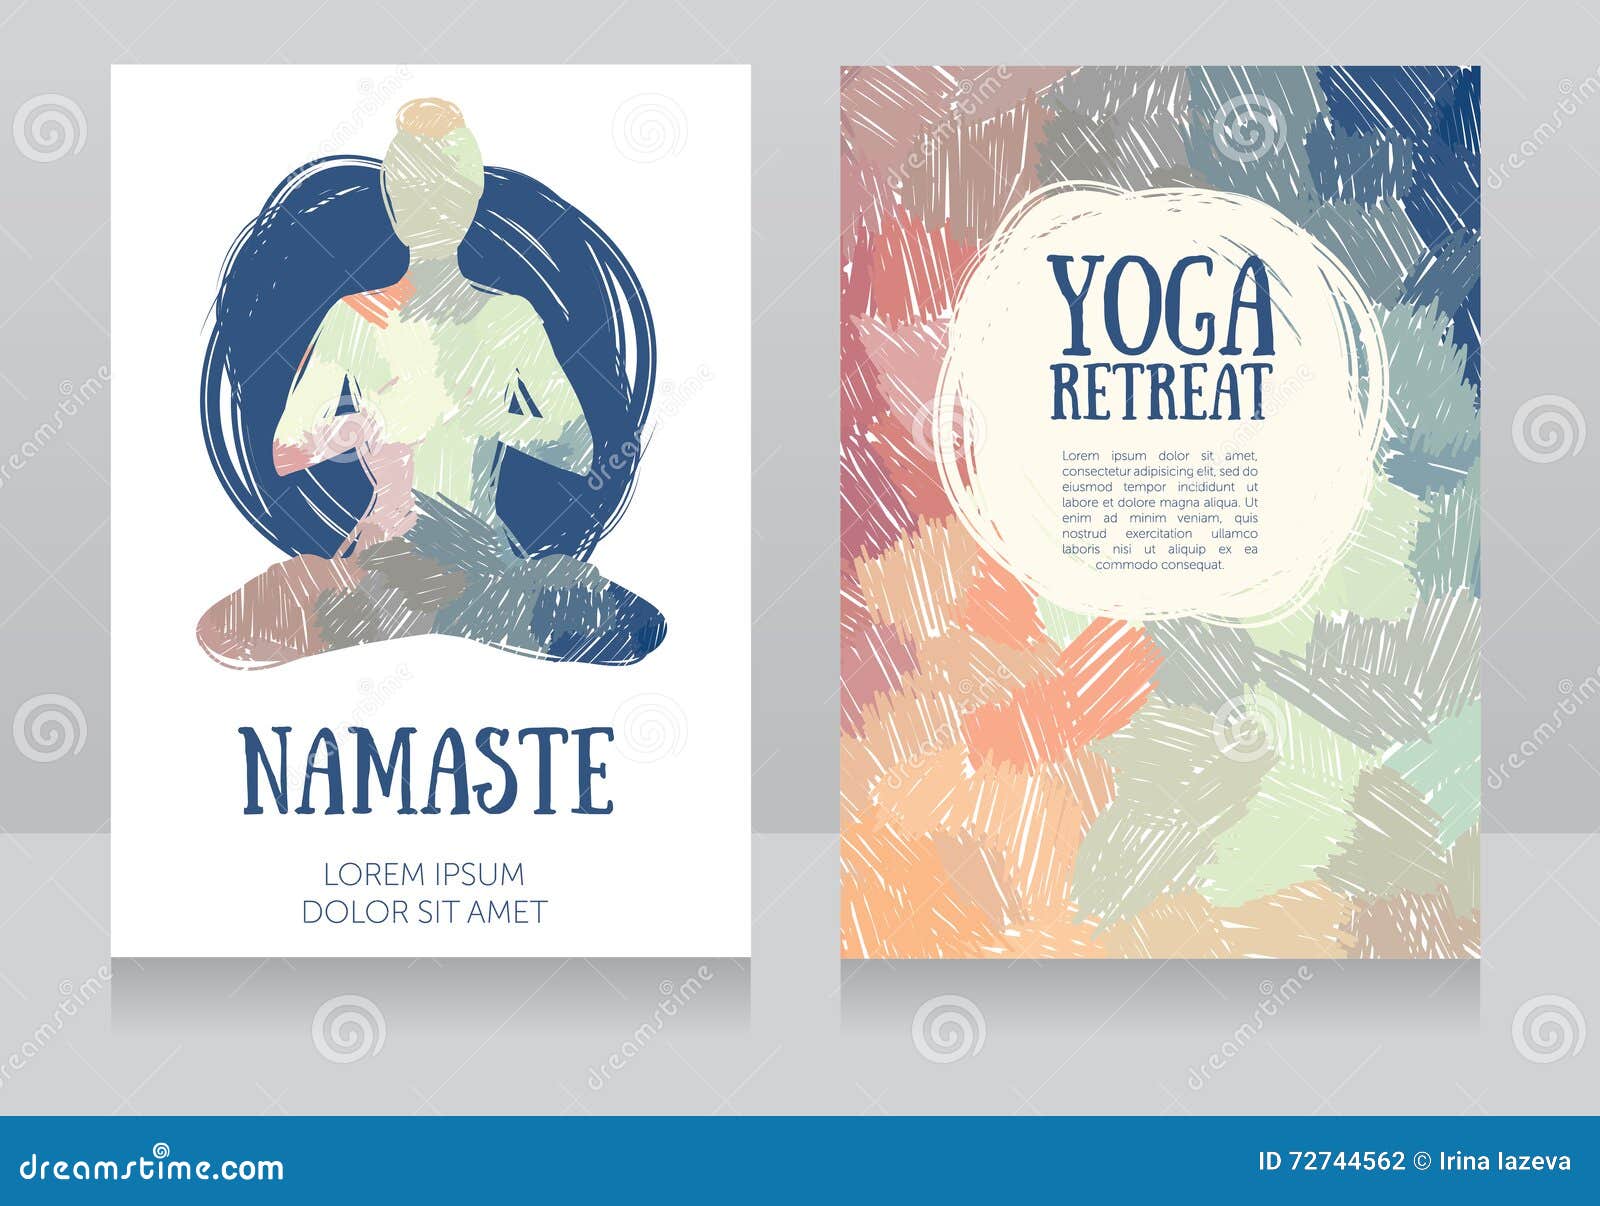 artistic cards template for yoga retreat or yoga studio